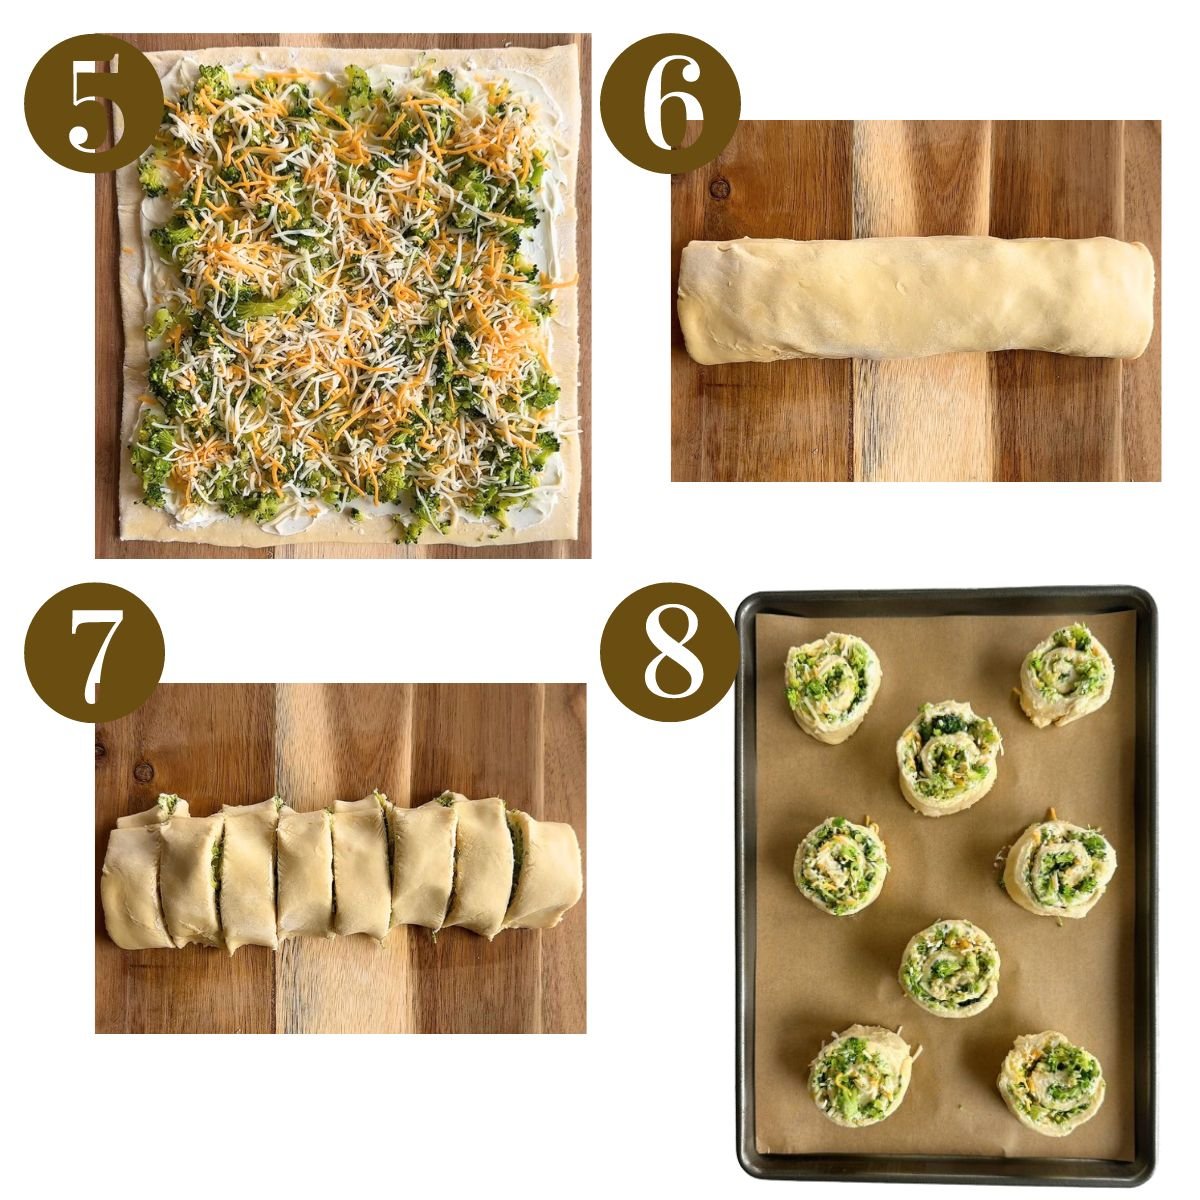 Steps to make broccoli cheese pinwheels.